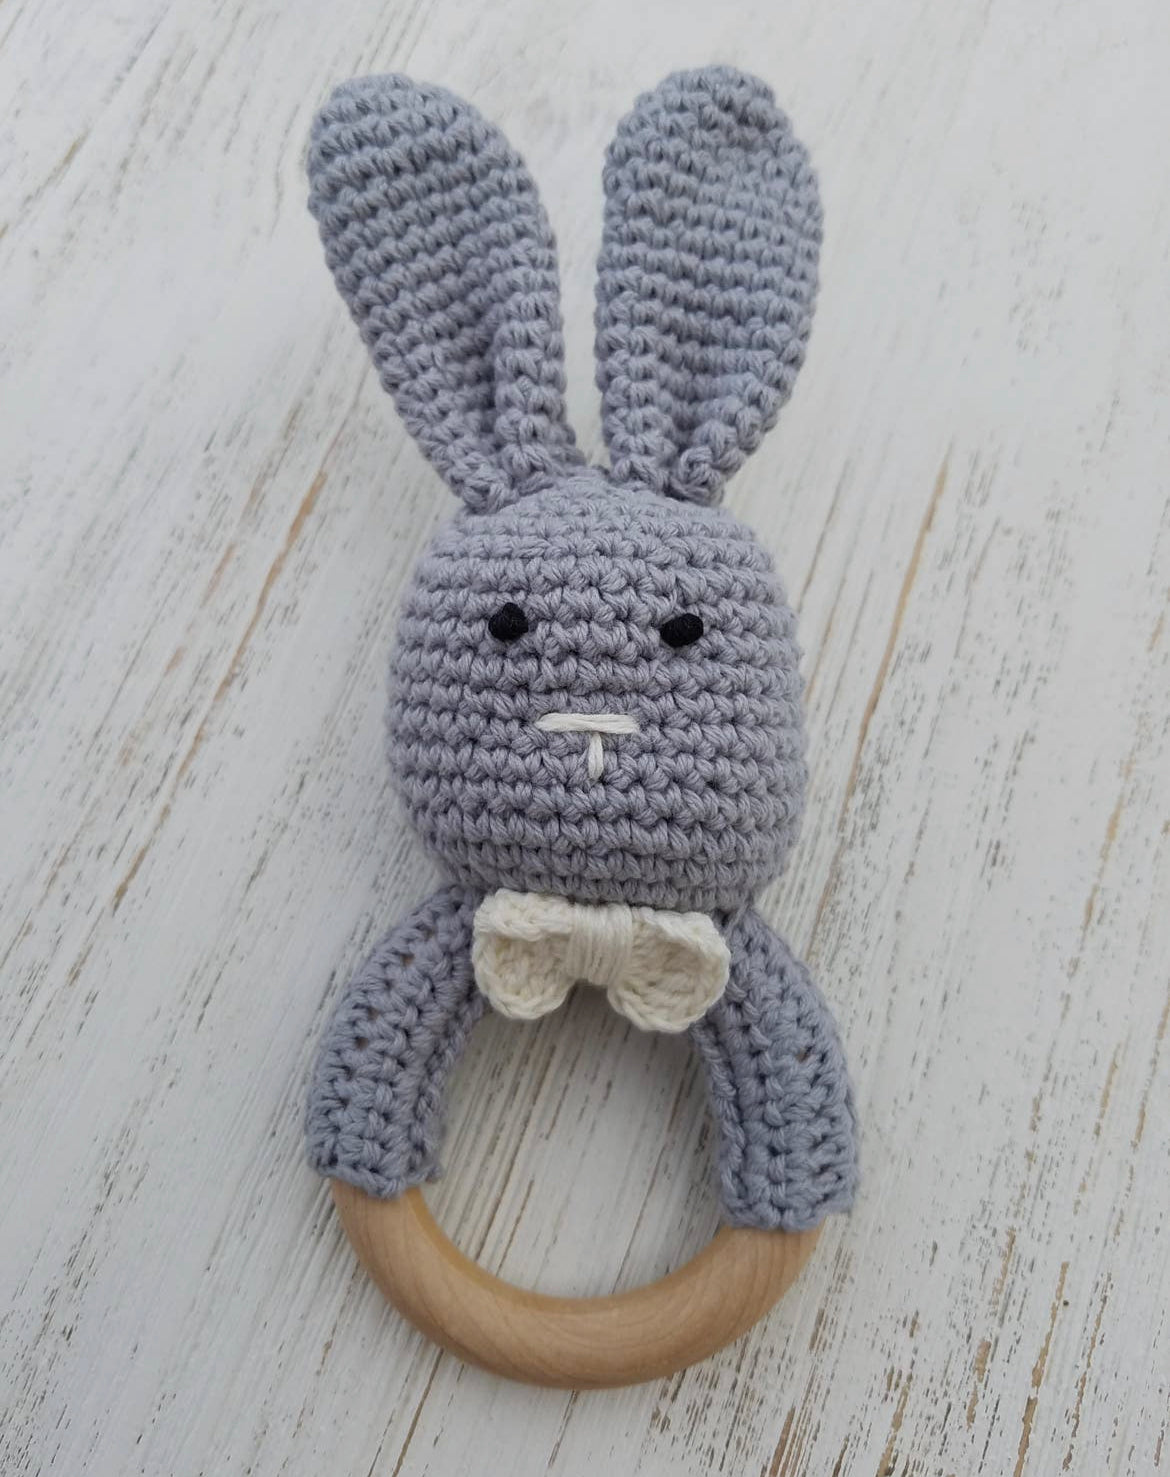 Crochet Baby Rattle